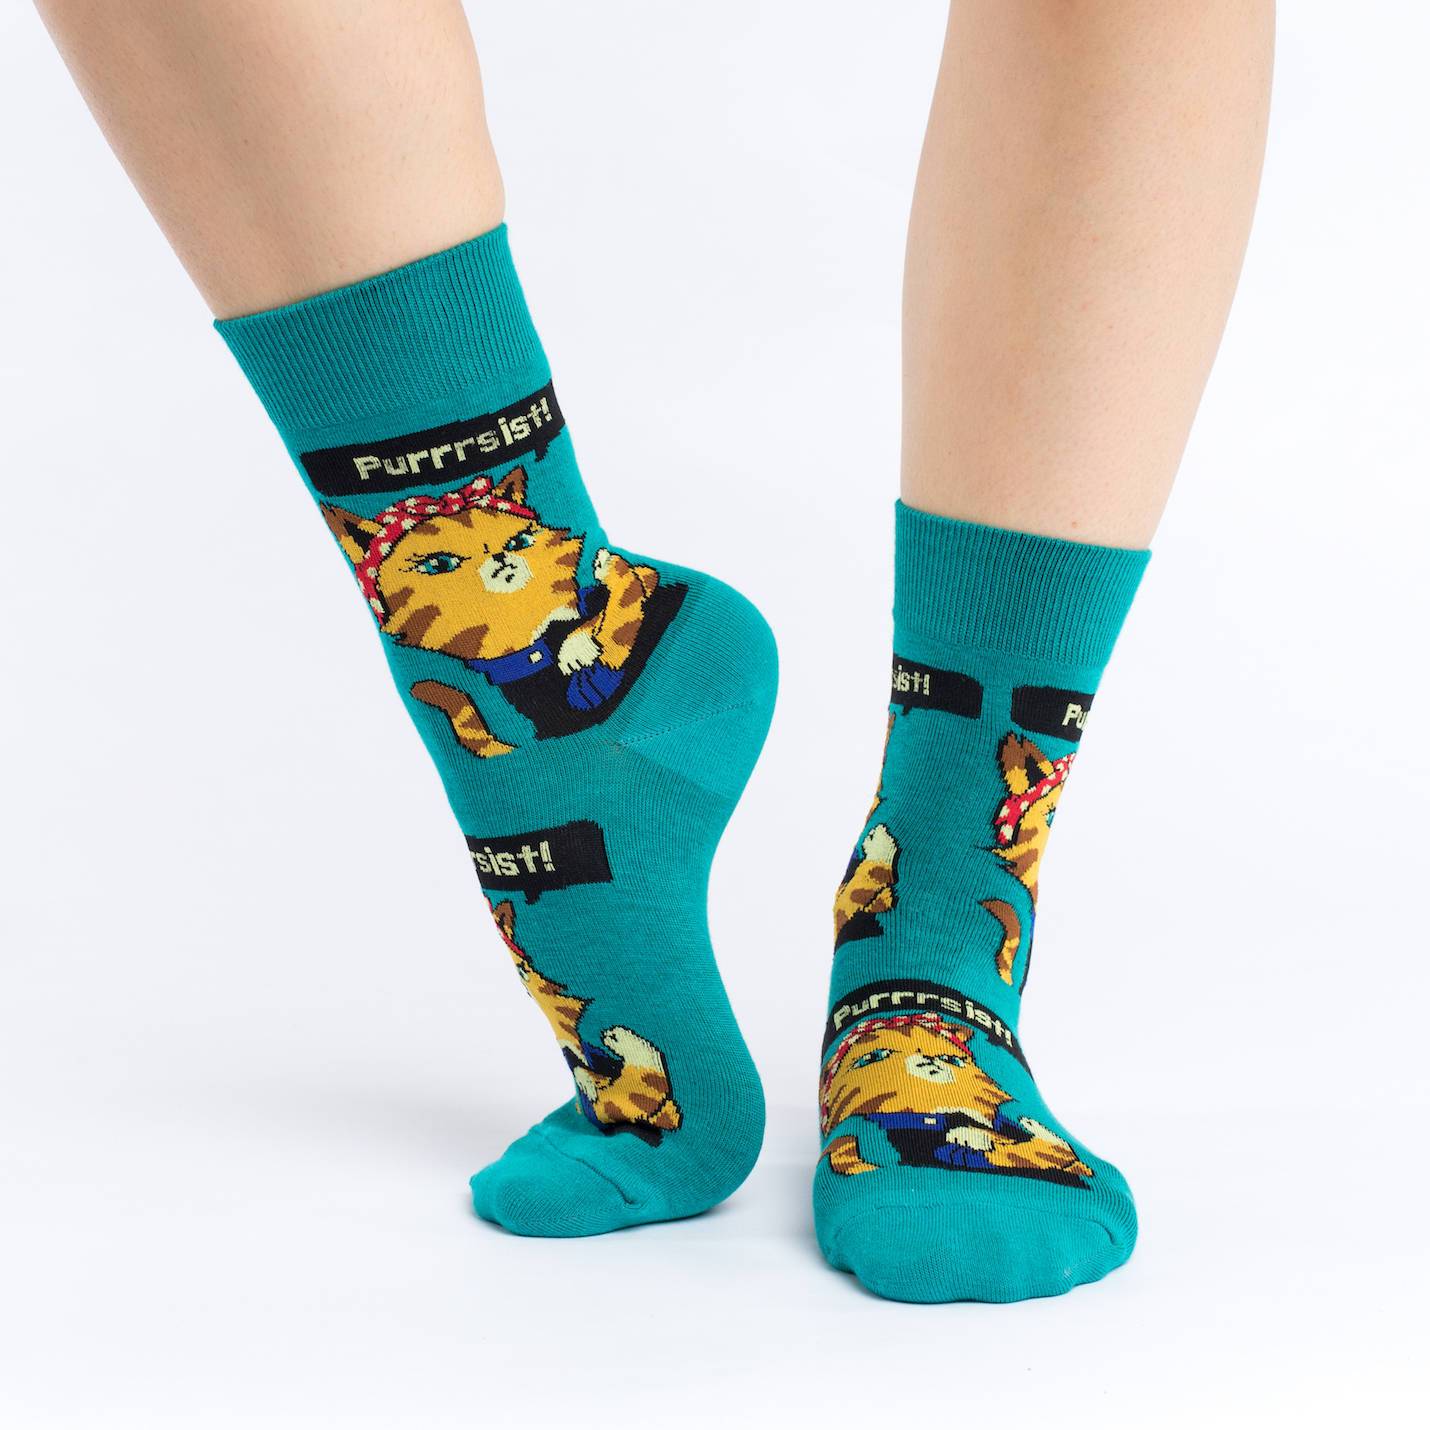 Socks - Women's Crew - Purrsist Cat